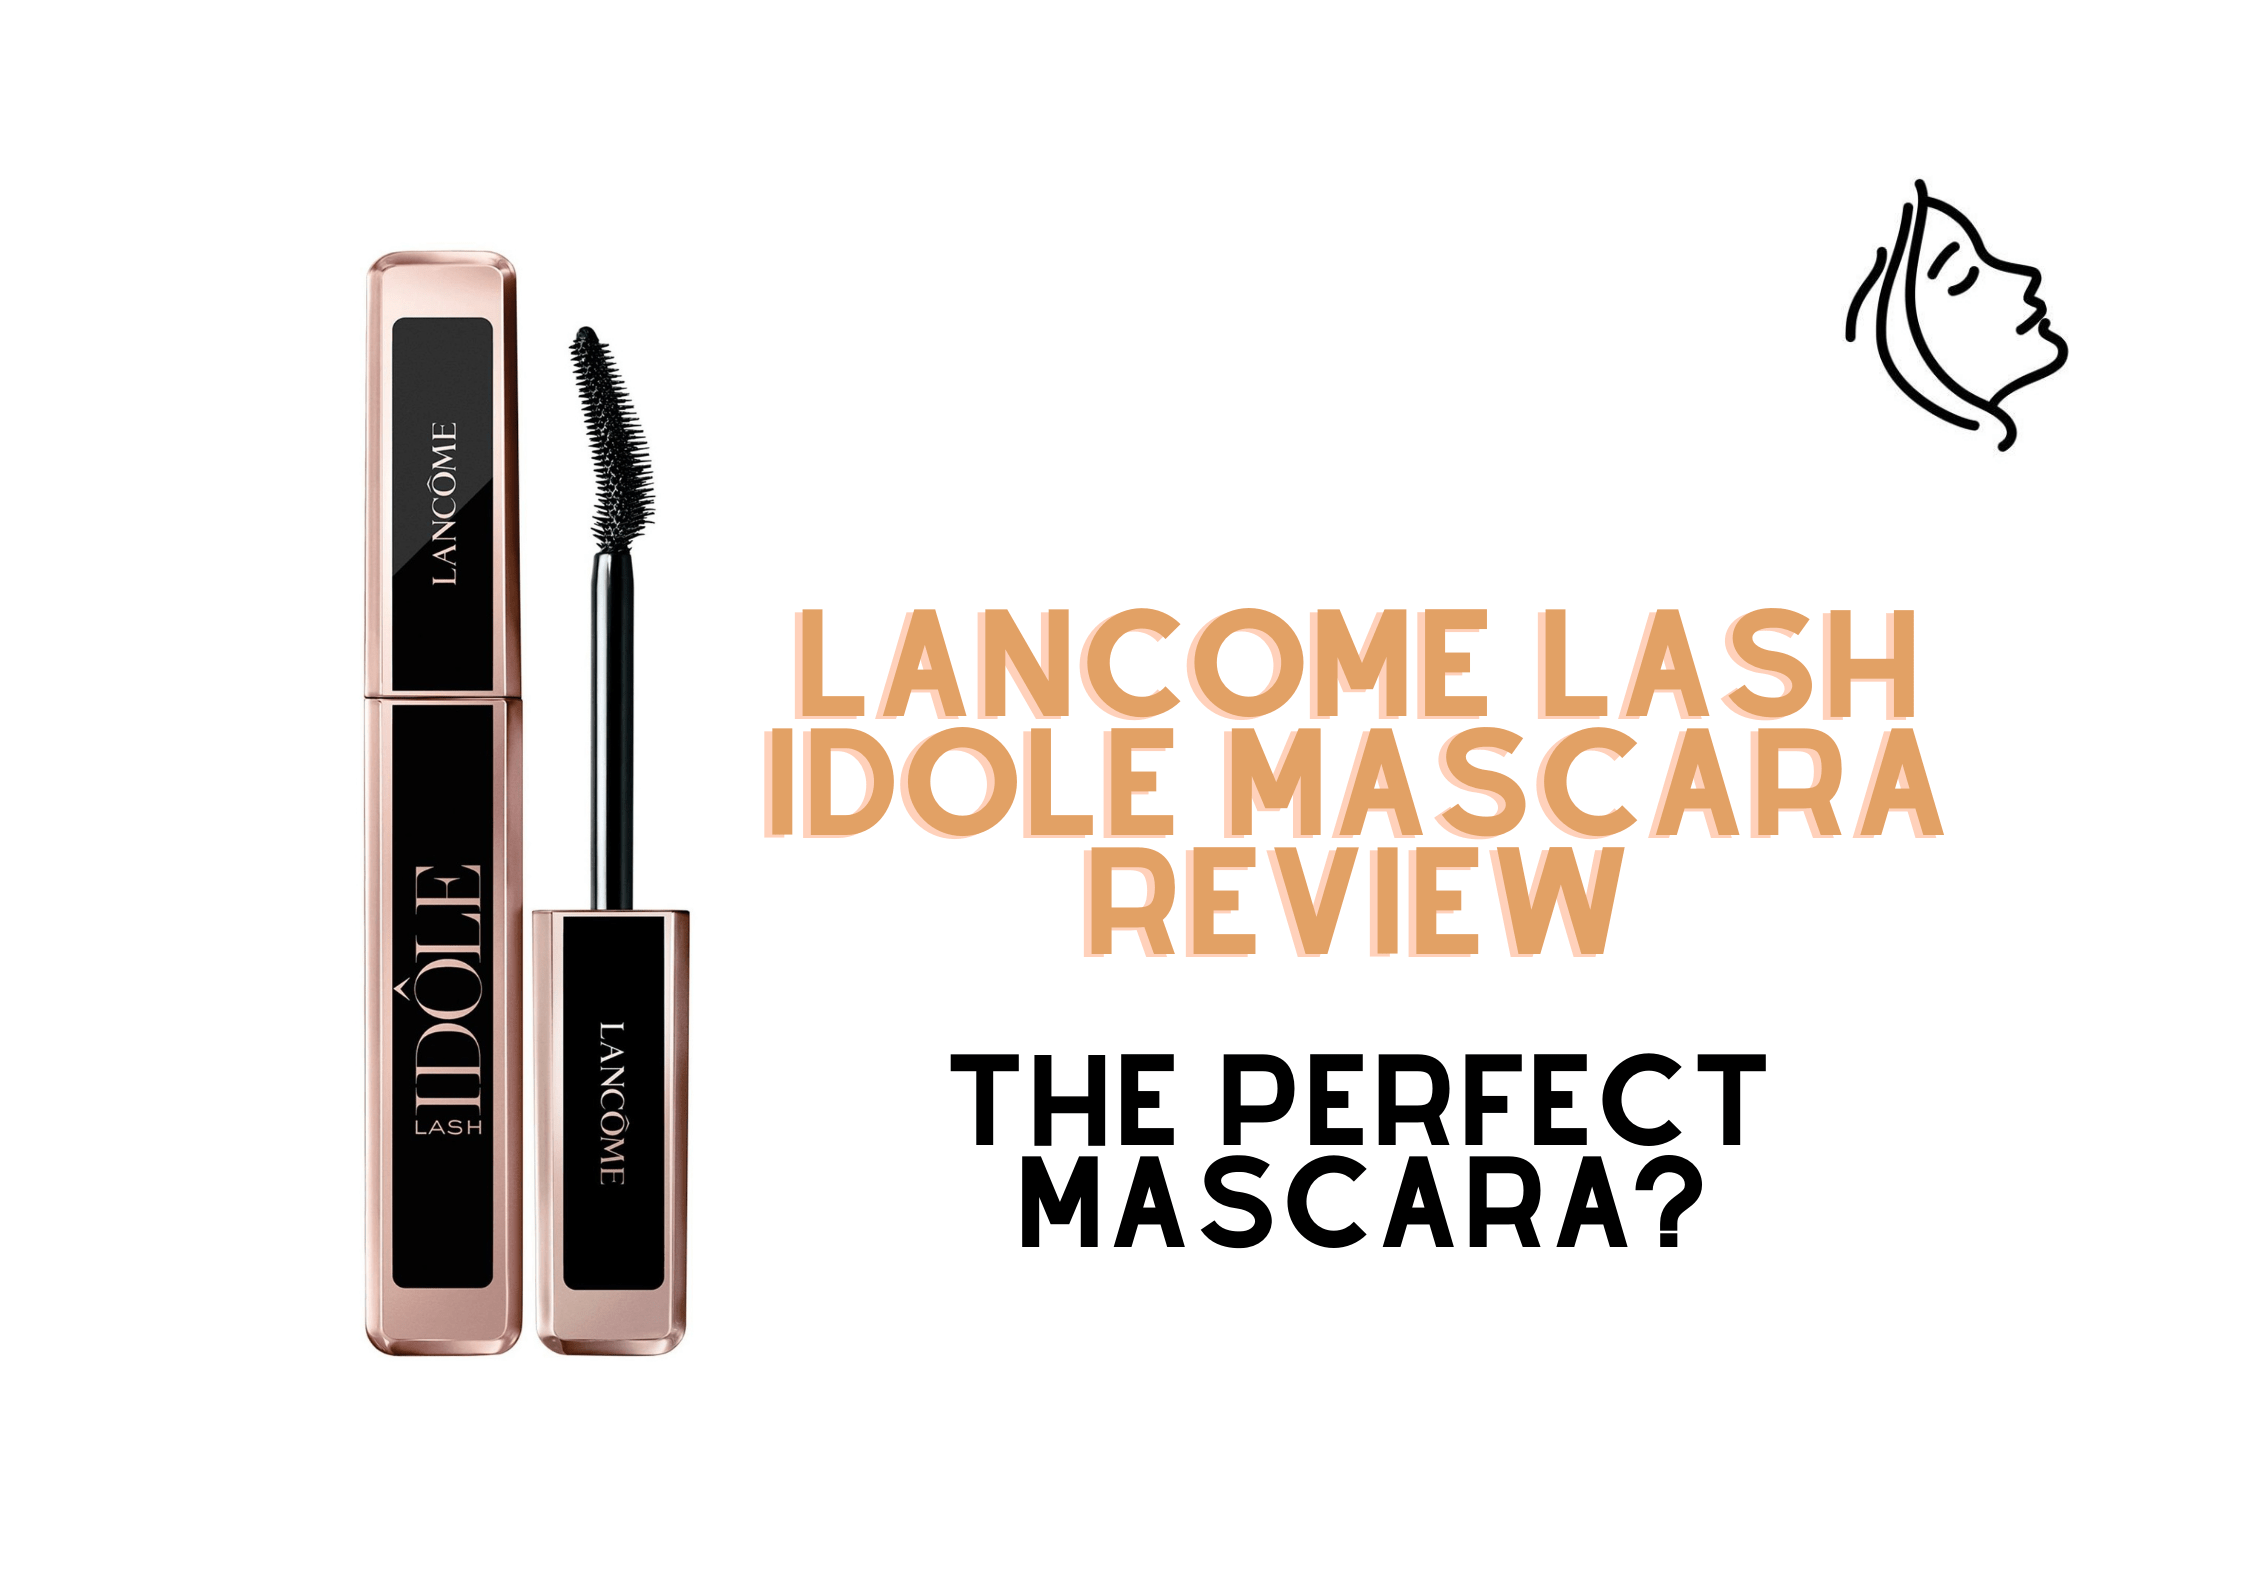 Lancome Lash Idole Mascara Review